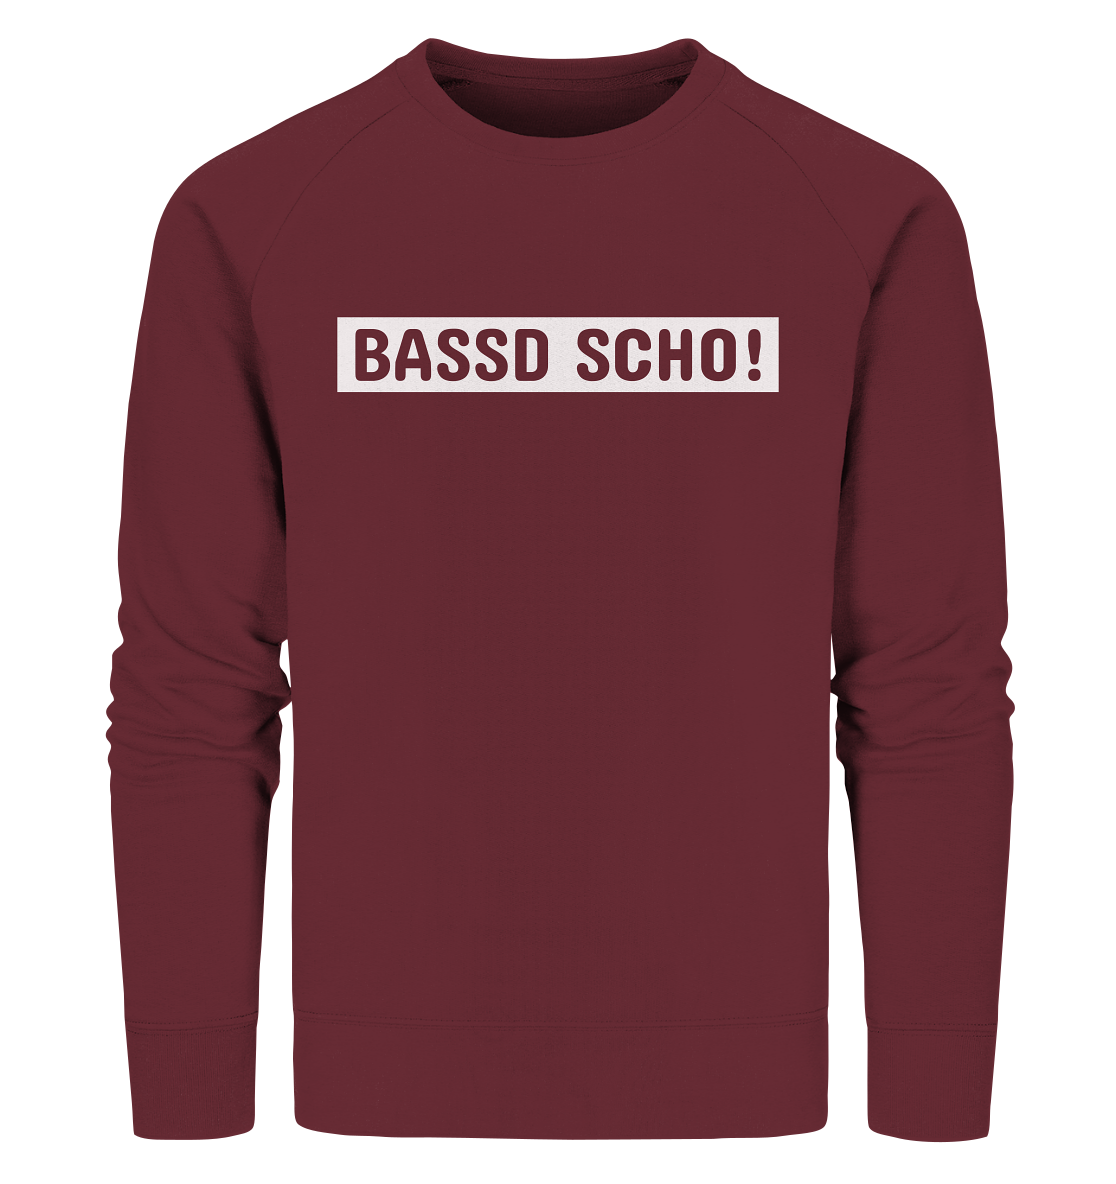 #BASSDSCHO! - Organic Sweatshirt